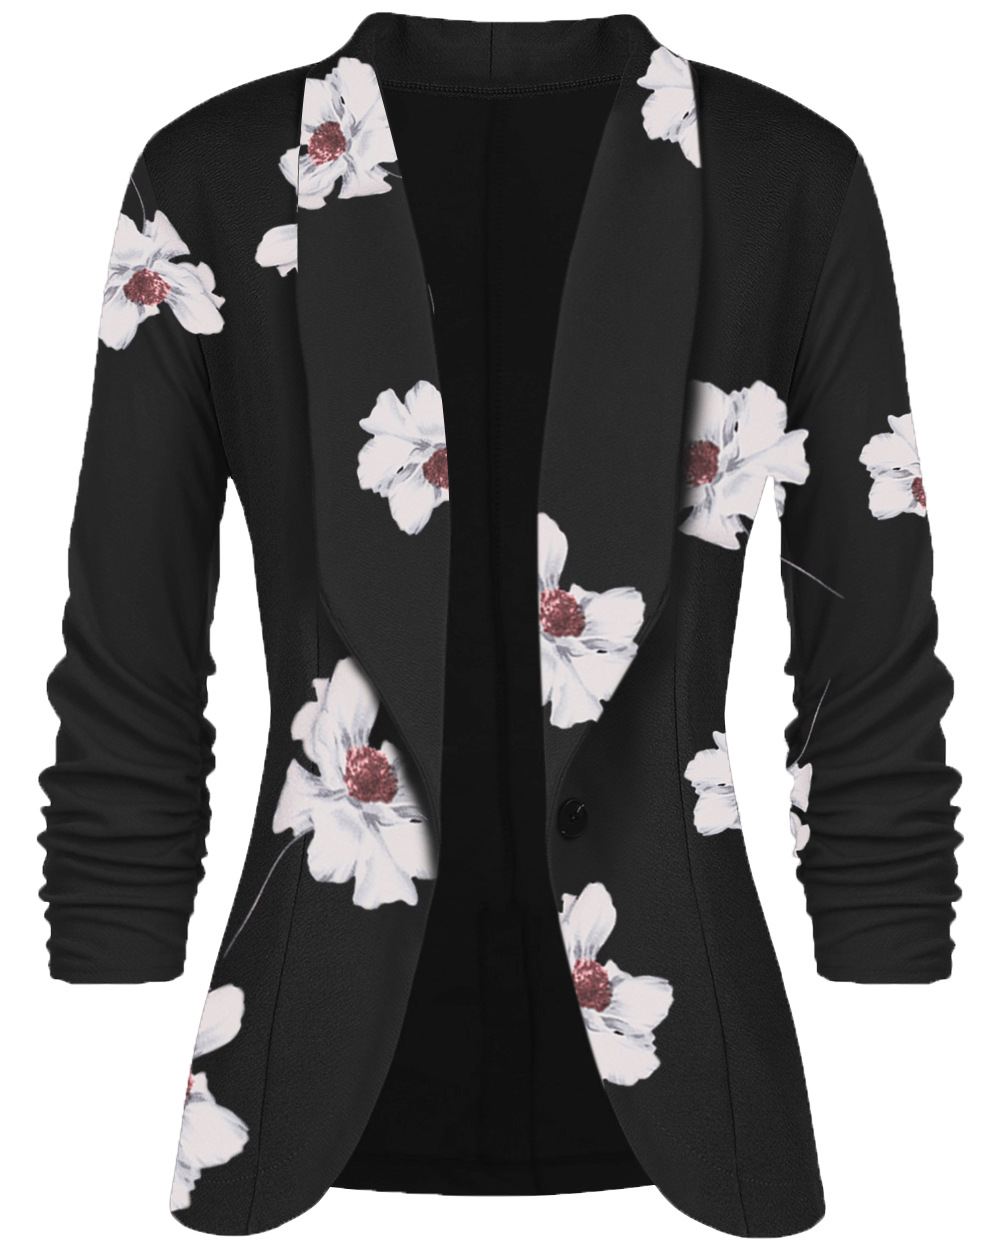  Women Slim Suit Coat 3/4 Sleeve One Button Casual Office Business Blazer Jacket Outwear floral